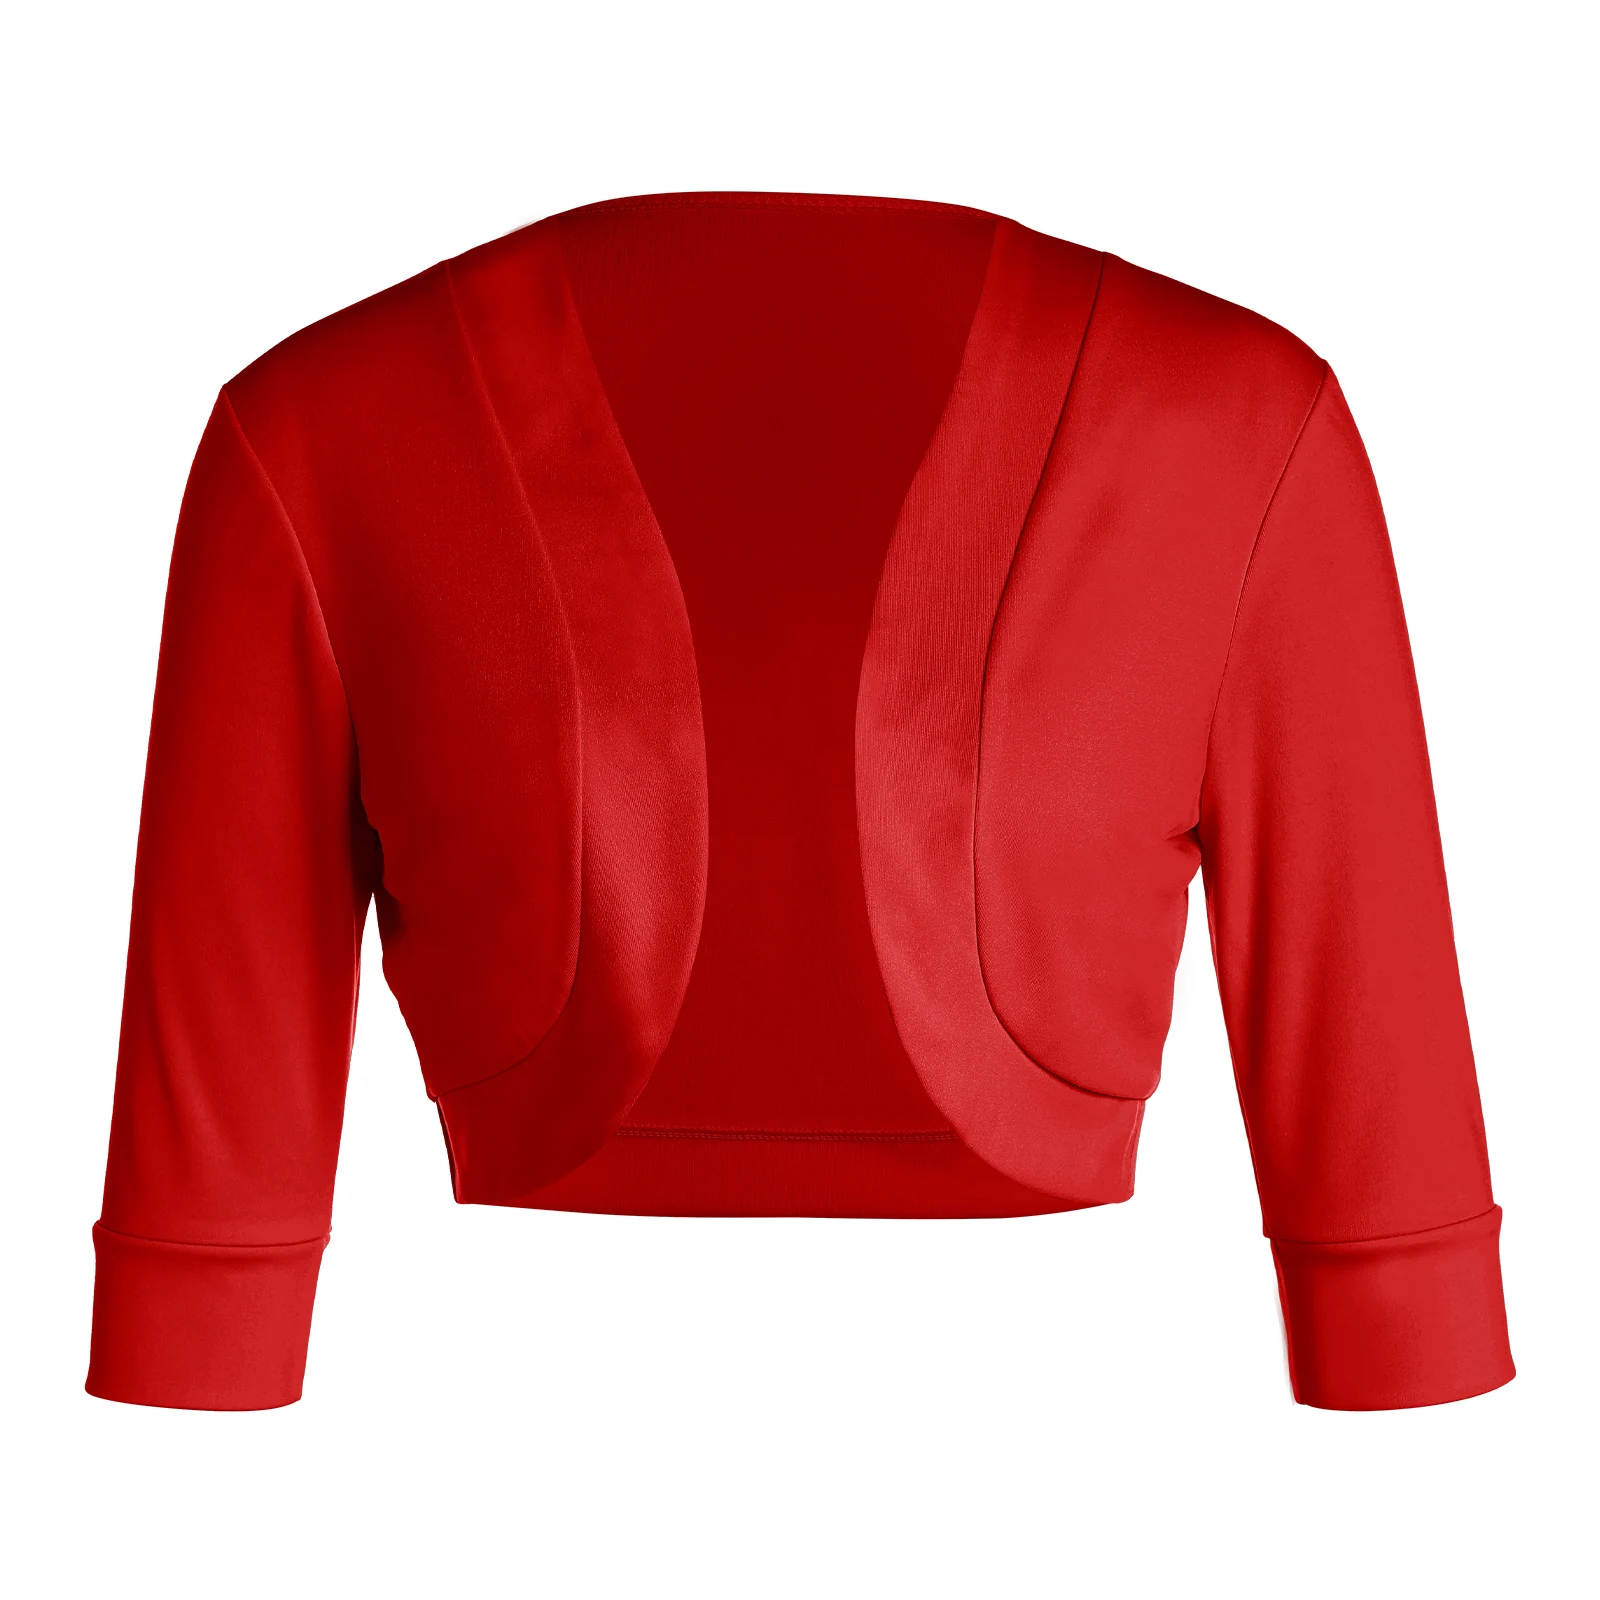 Gaono Women's 3/4 Sleeve Cropped Bolero Cardigans Sweaters Jackets Open Front Short Shrugs Cover Up Streetwear